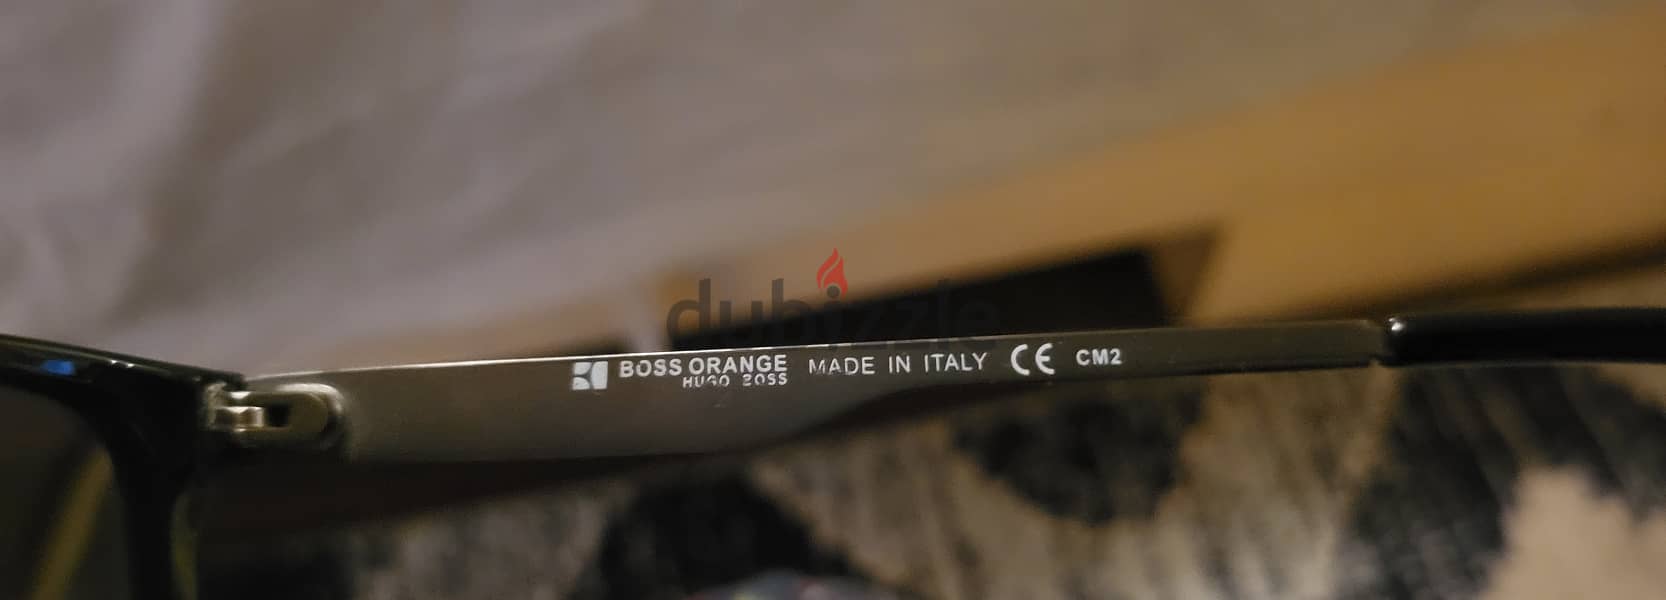 Boss orange original made in Italy نظاره اصليه شيه جديده 2